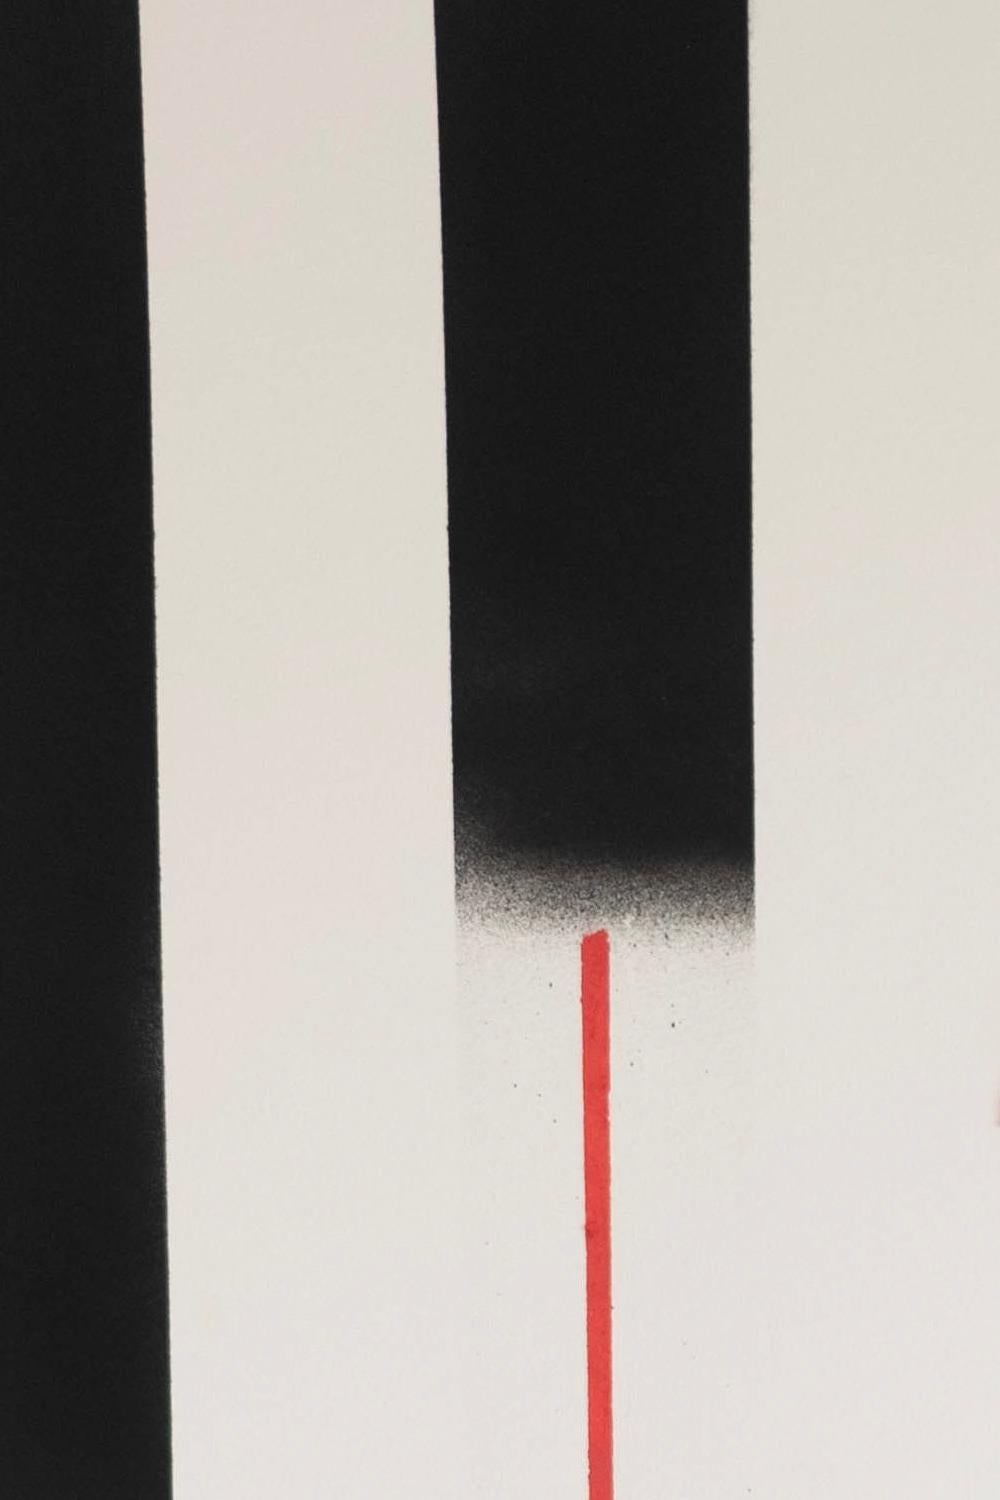 Black Stripe, Acrylic, oil pastel, aerosol, collage on paper, 60 x 84 cm, 2021 - Art by IRSKIY 